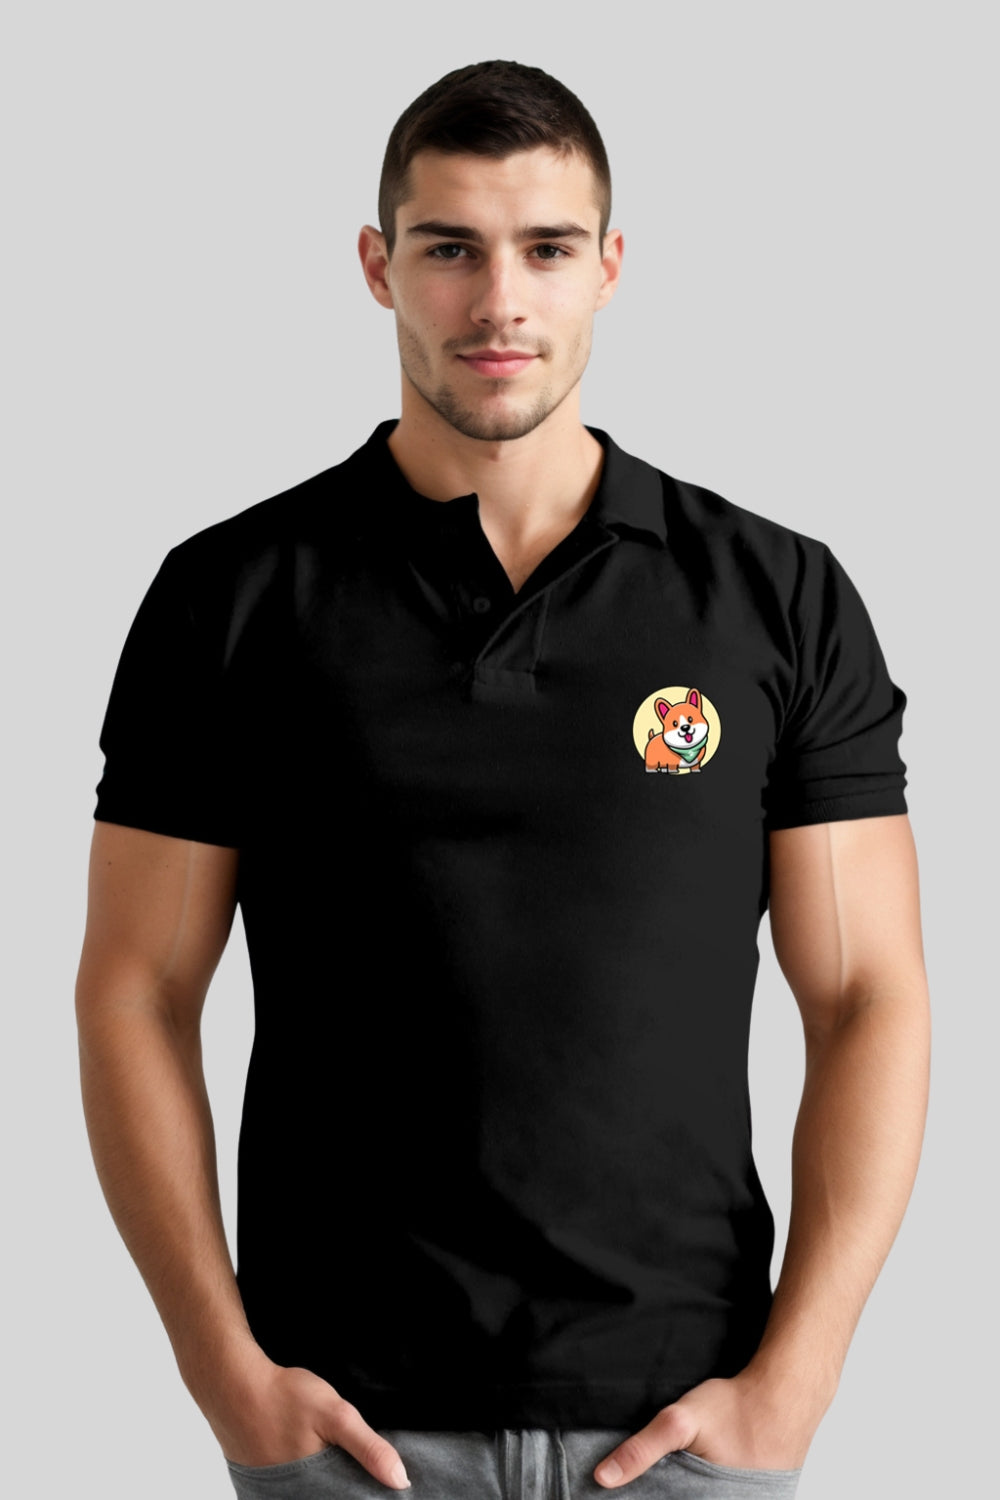 Cute Corgi Pocket Printed Black Polo Shirt